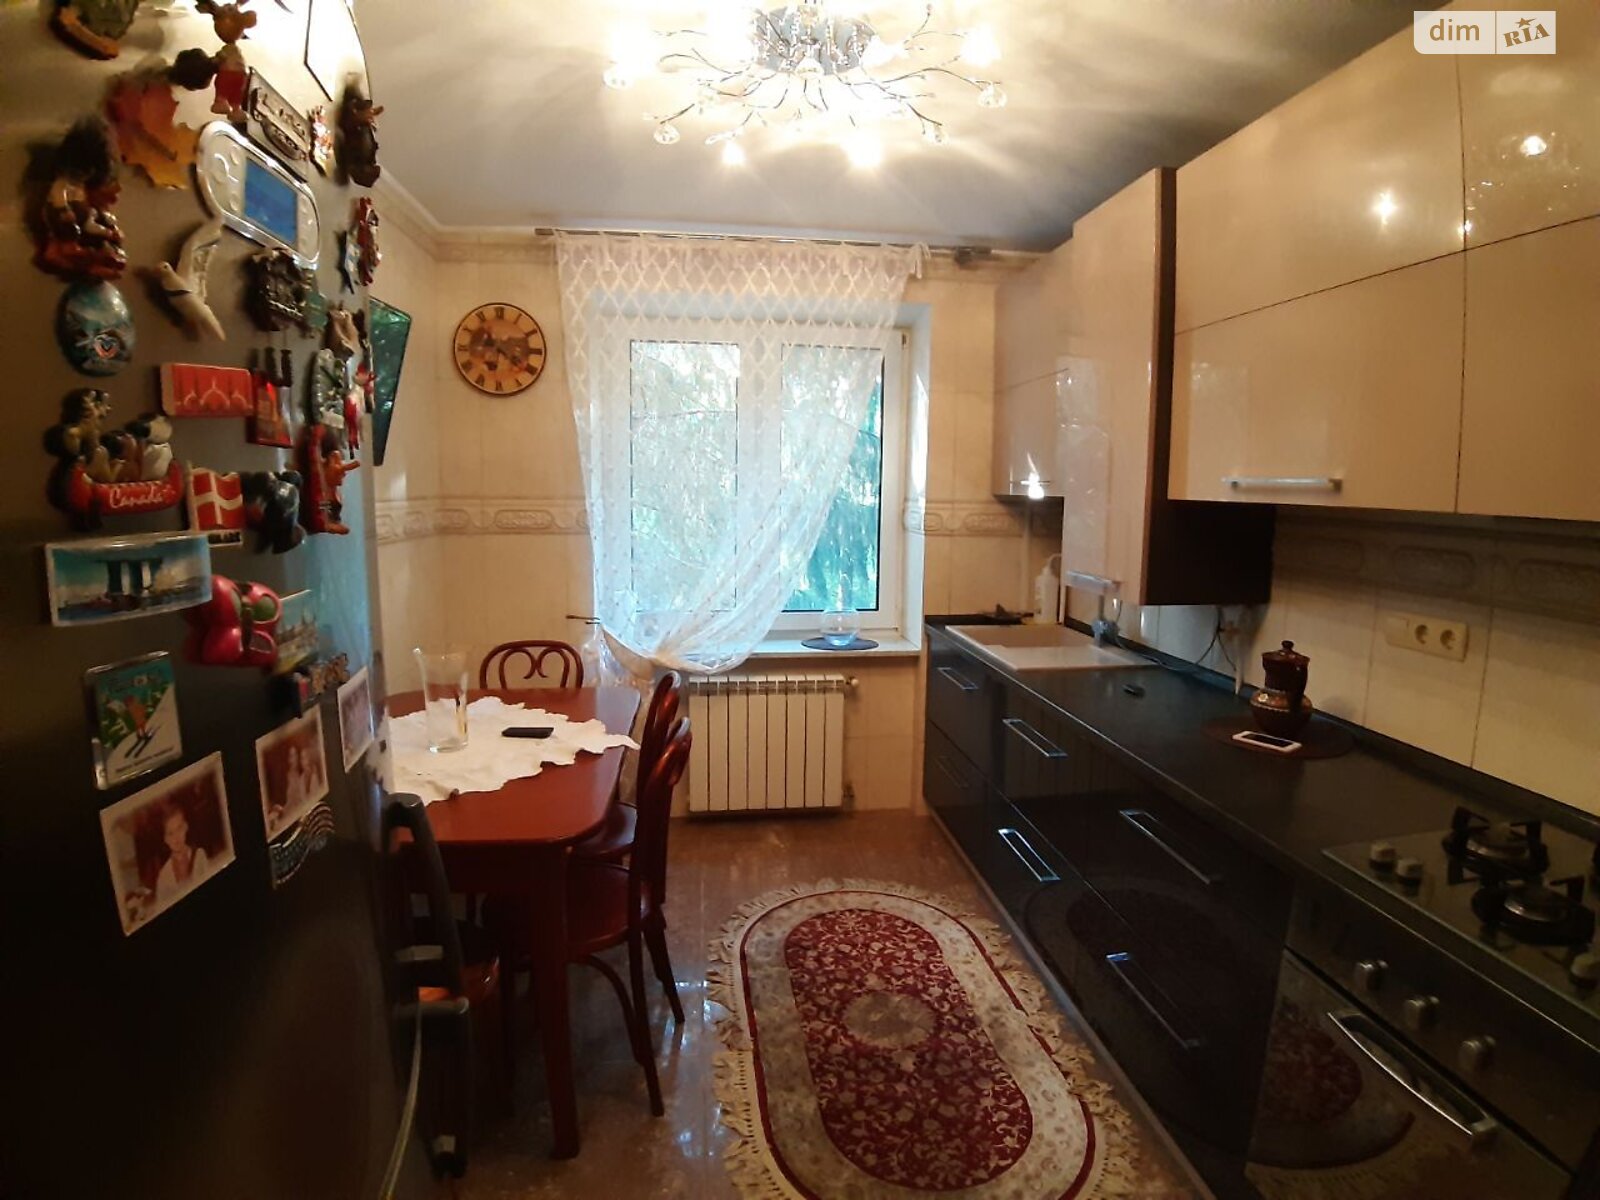 Продажа трехкомнатной квартиры в Ровно, на ул. Ленокомбинатовская 7, район Ленокомбинат фото 1